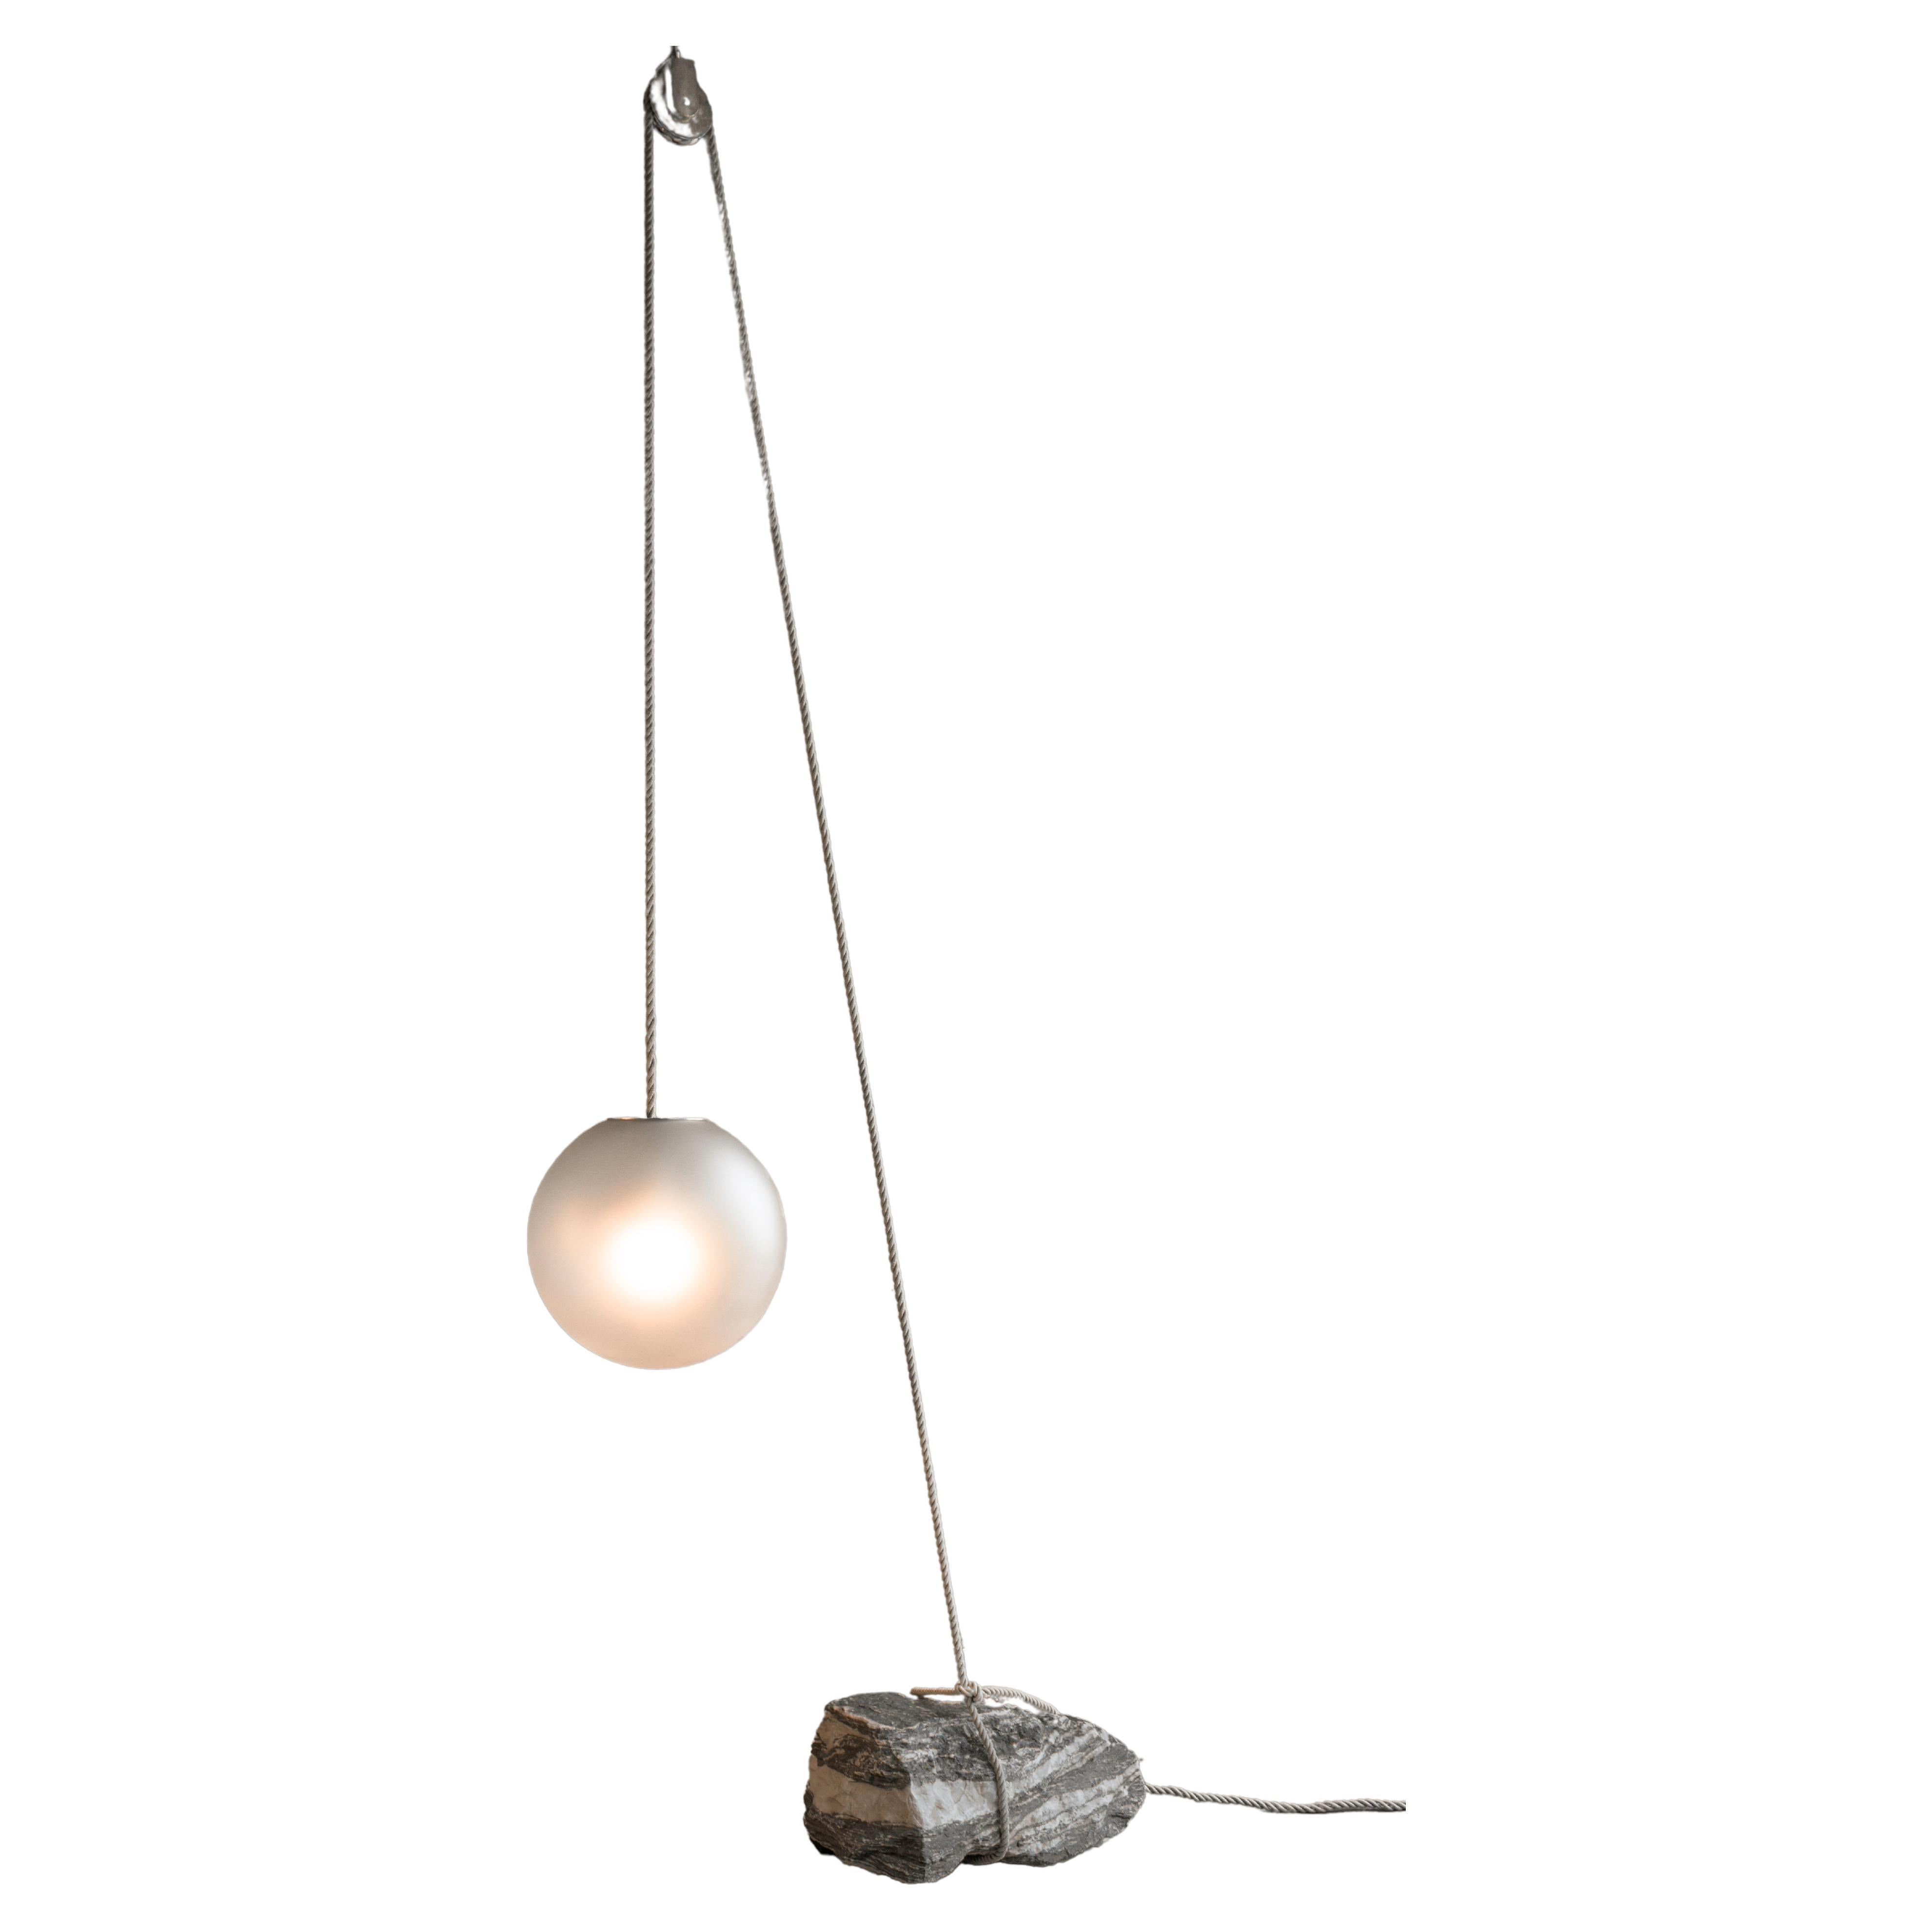 Dutch Beacon of Light D50 Glass Ball Sculptural Natural Stone Pendant Floor Lamp For Sale